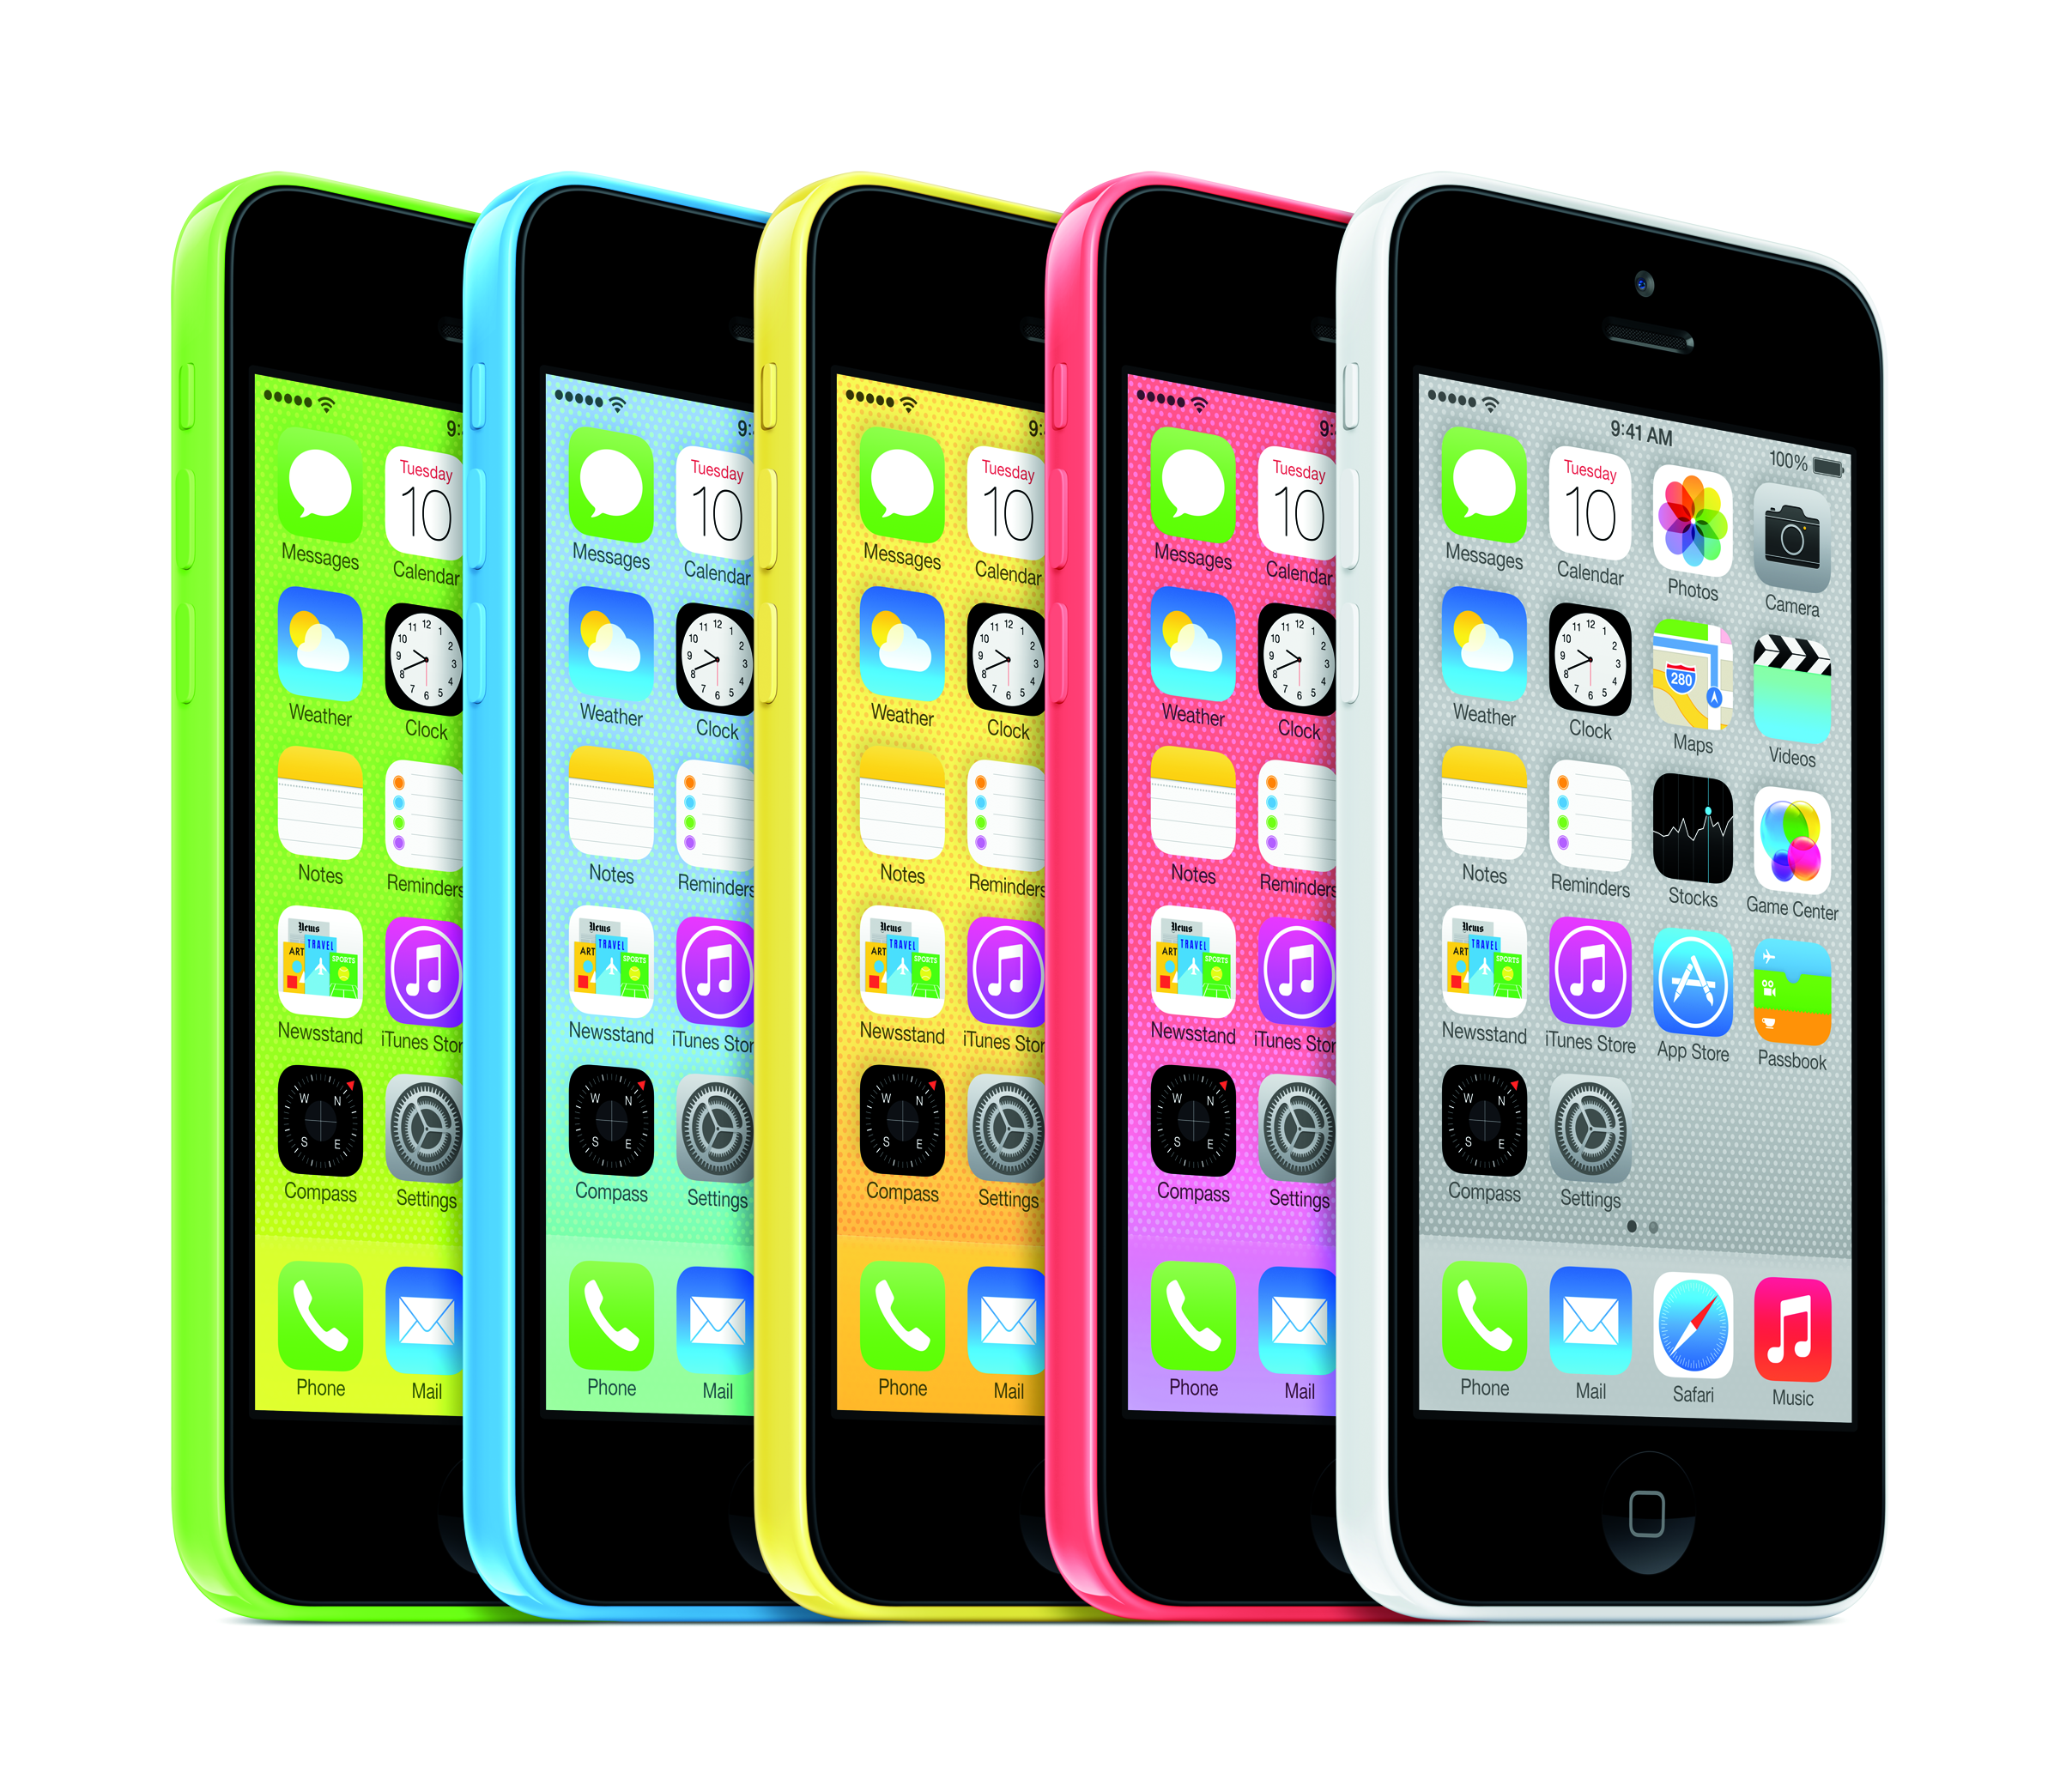 Apple Introduces iPhone 5c.